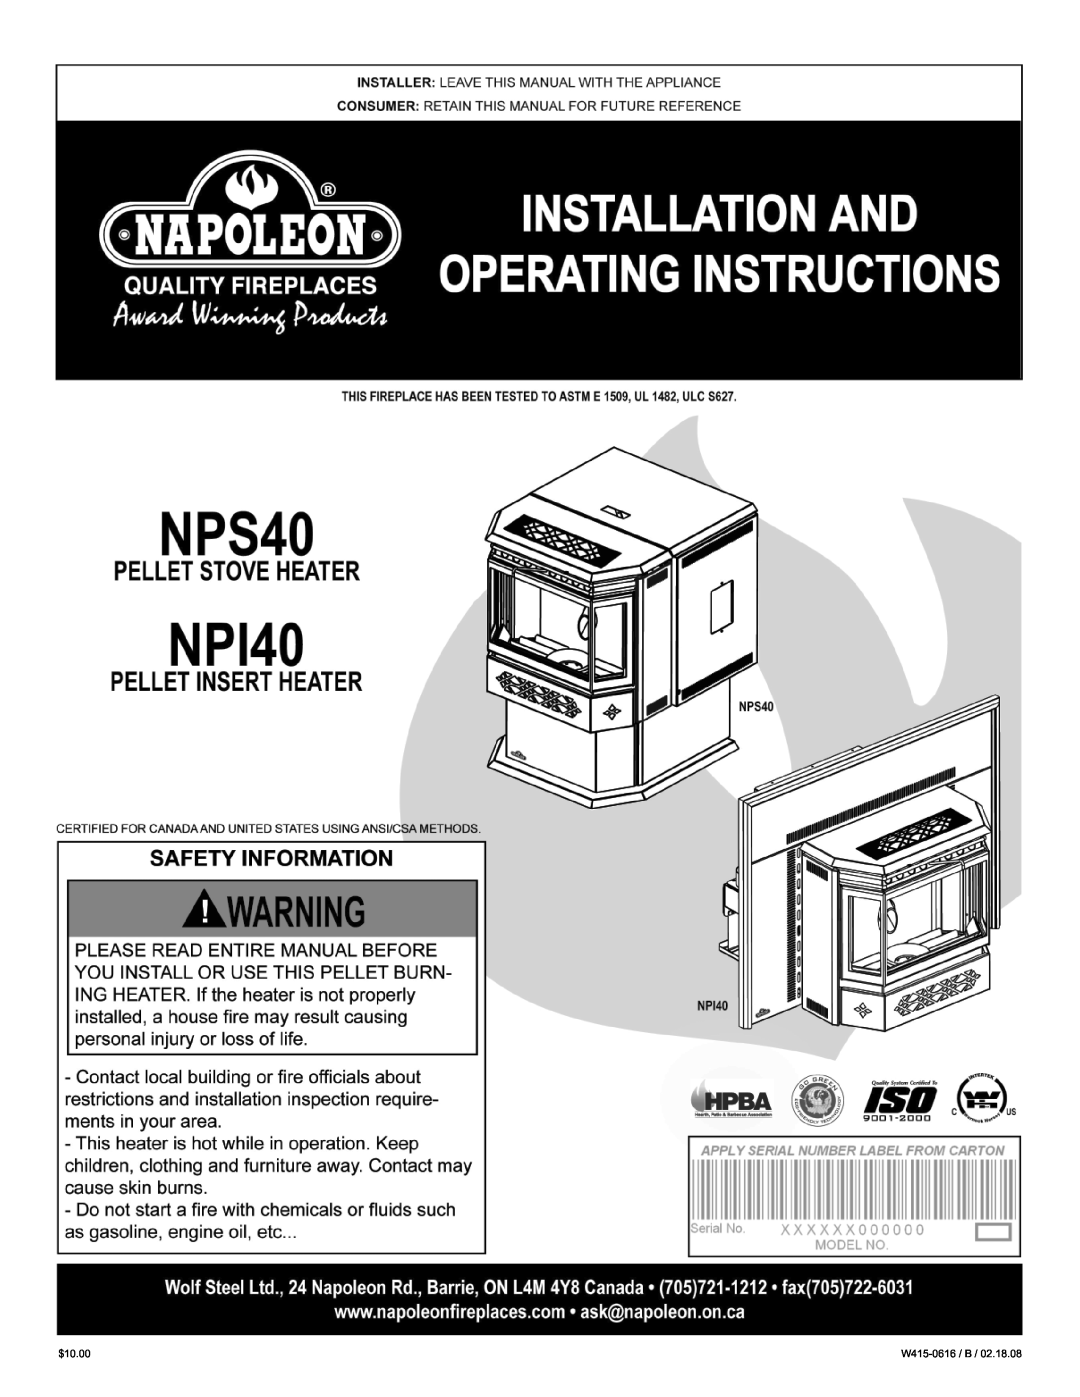 Napoleon Fireplaces NPS40, NPI40 manual W415-0616 /C, $10.00 